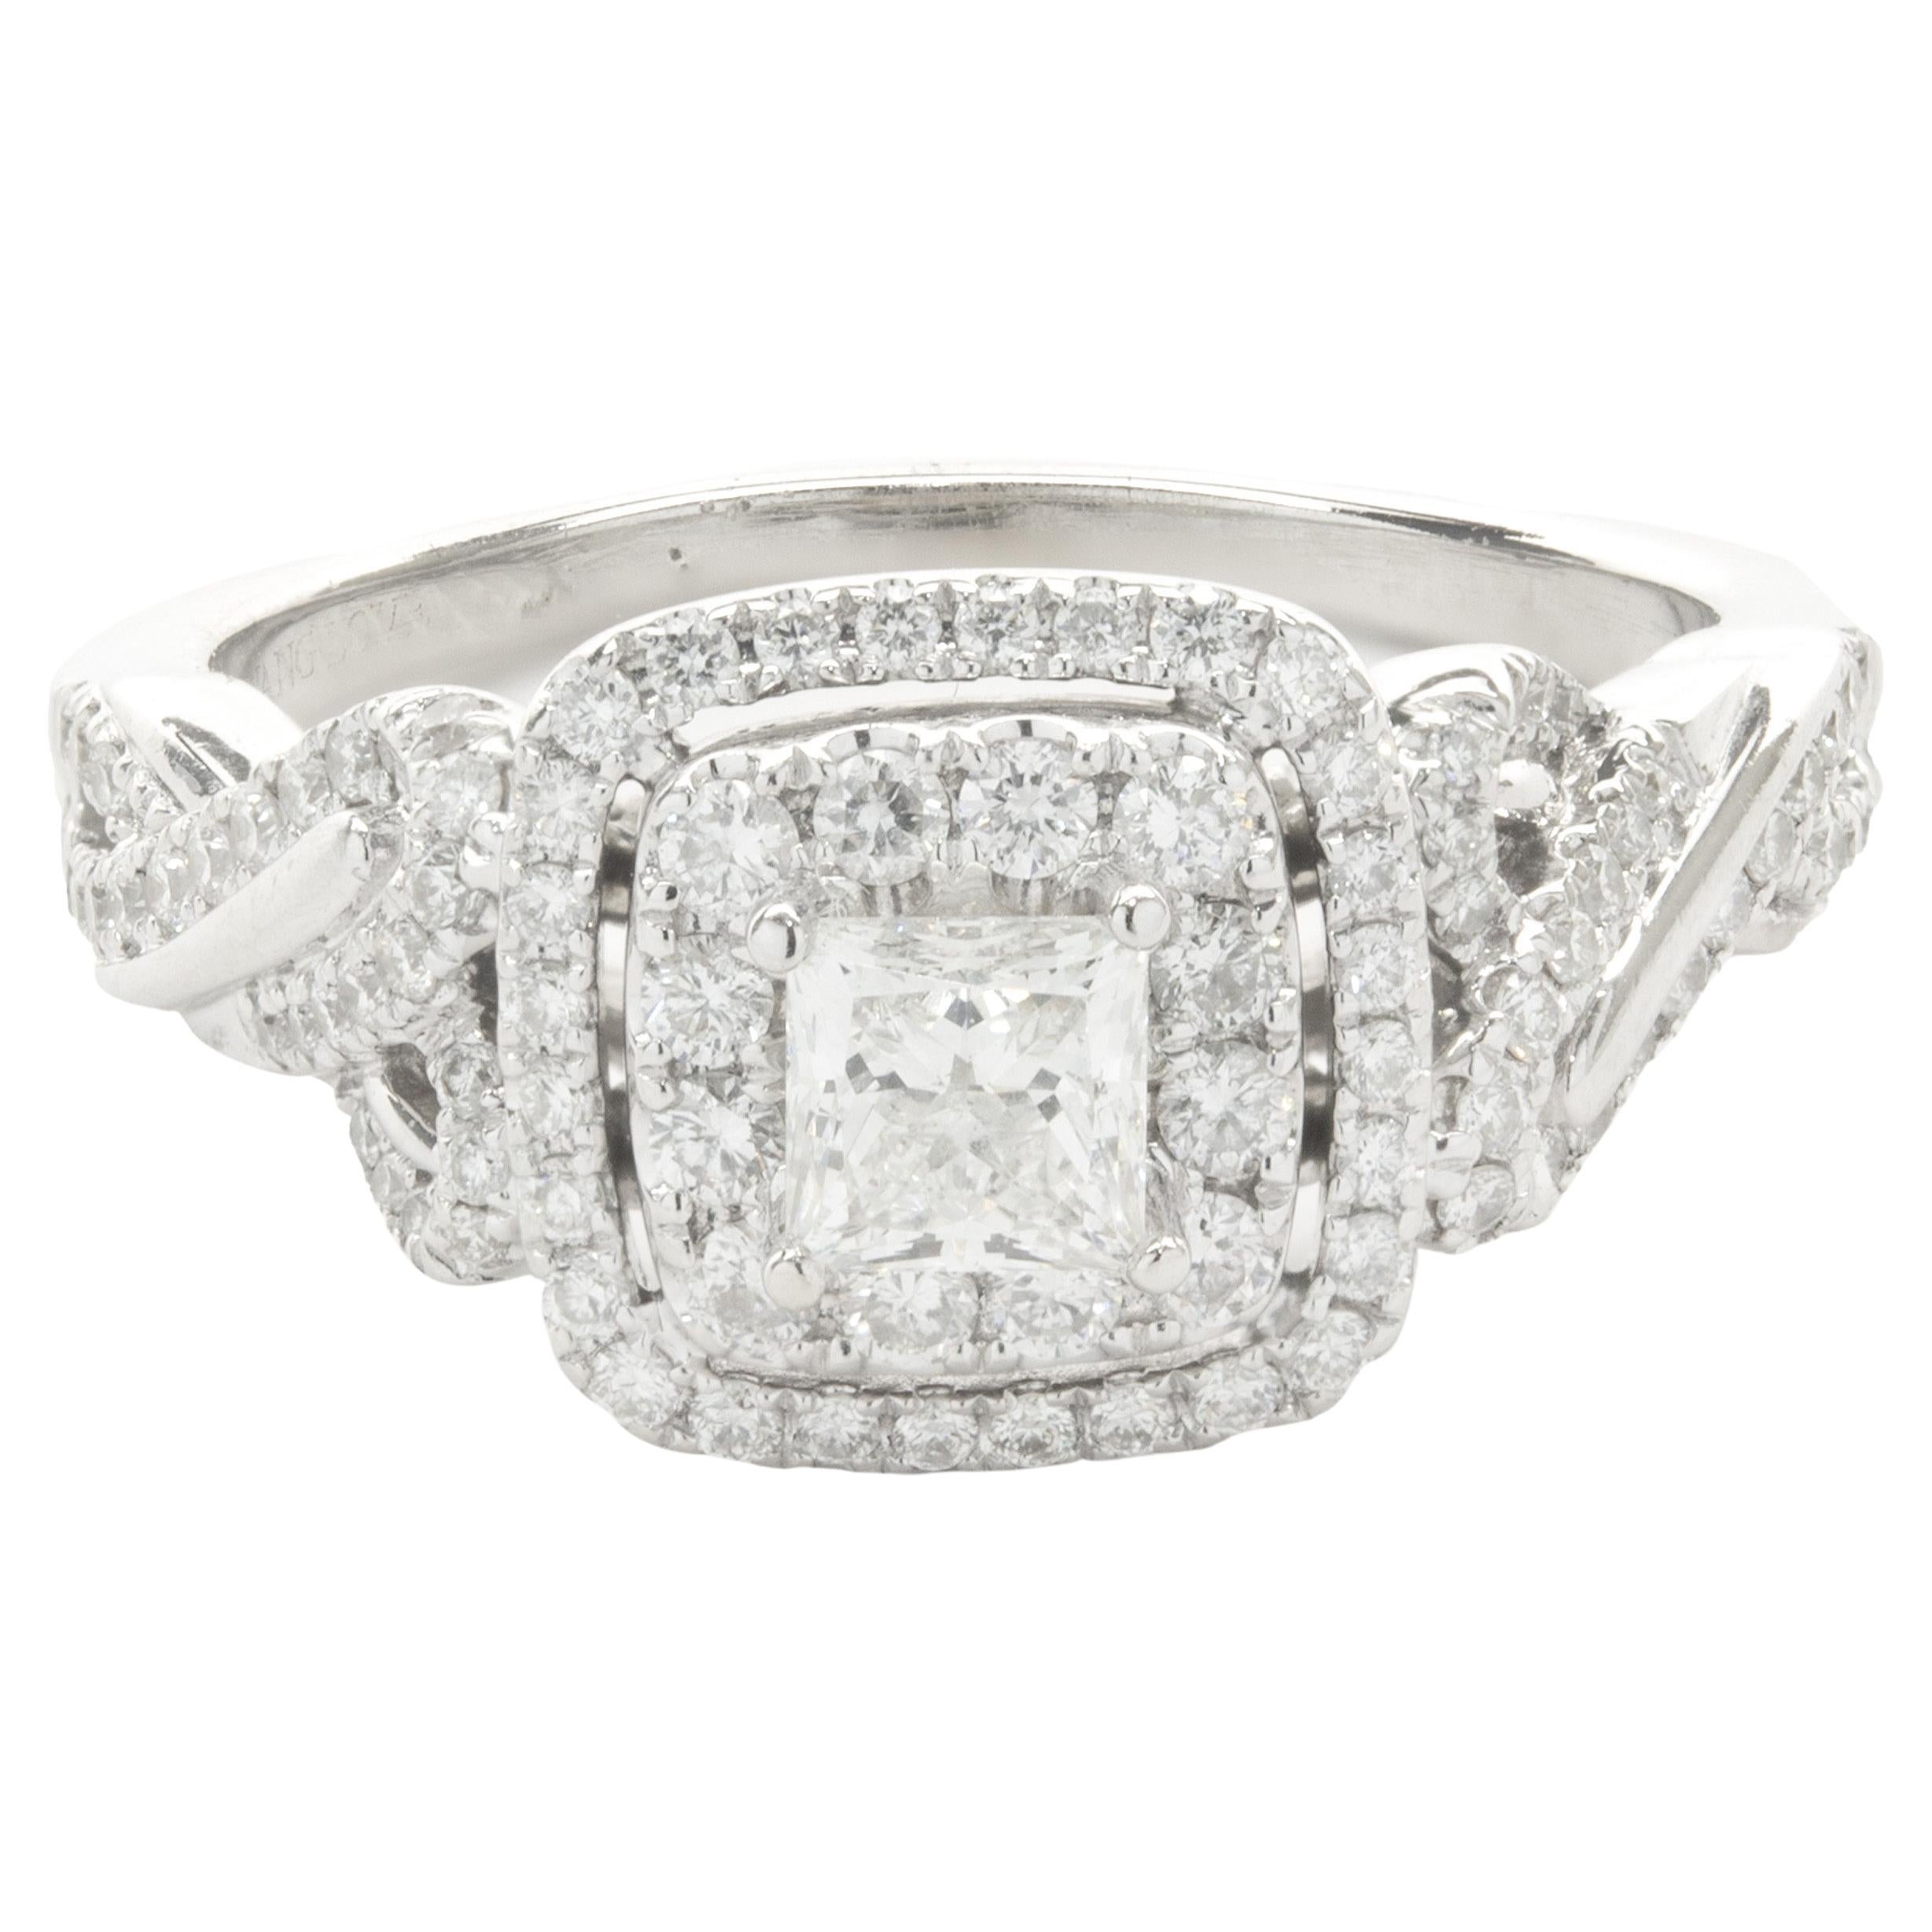 Vera Wang 14 Karat White Gold Princess Cut Diamond Engagement Ring